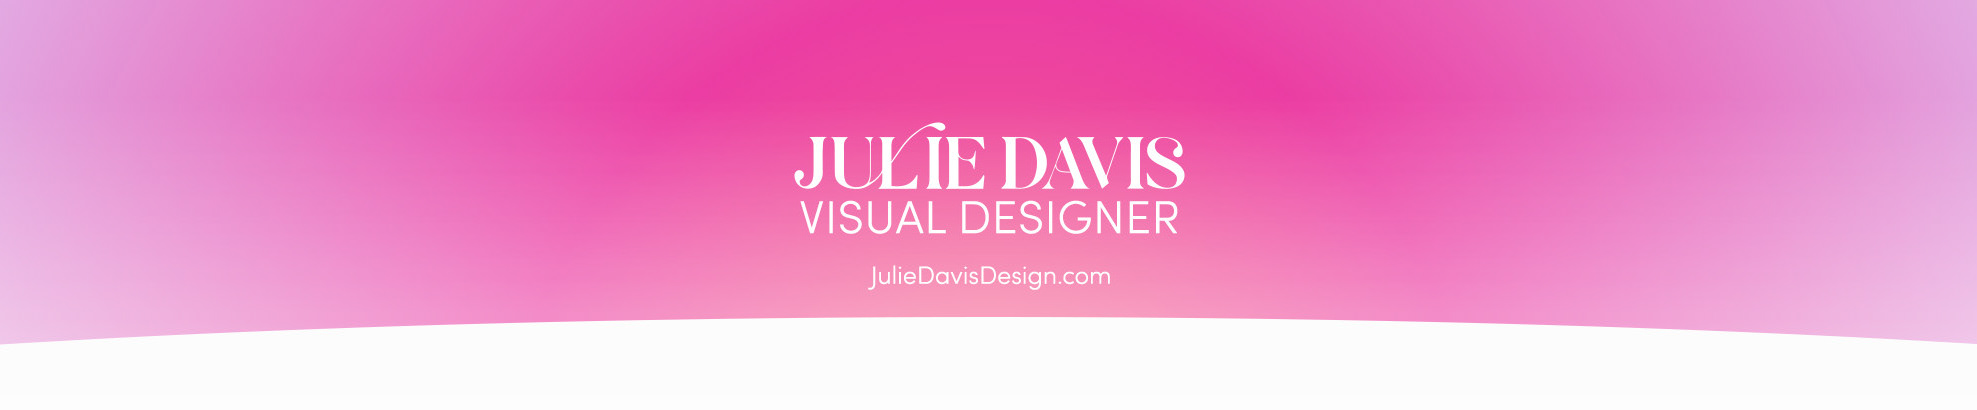 Julie Davis's profile banner